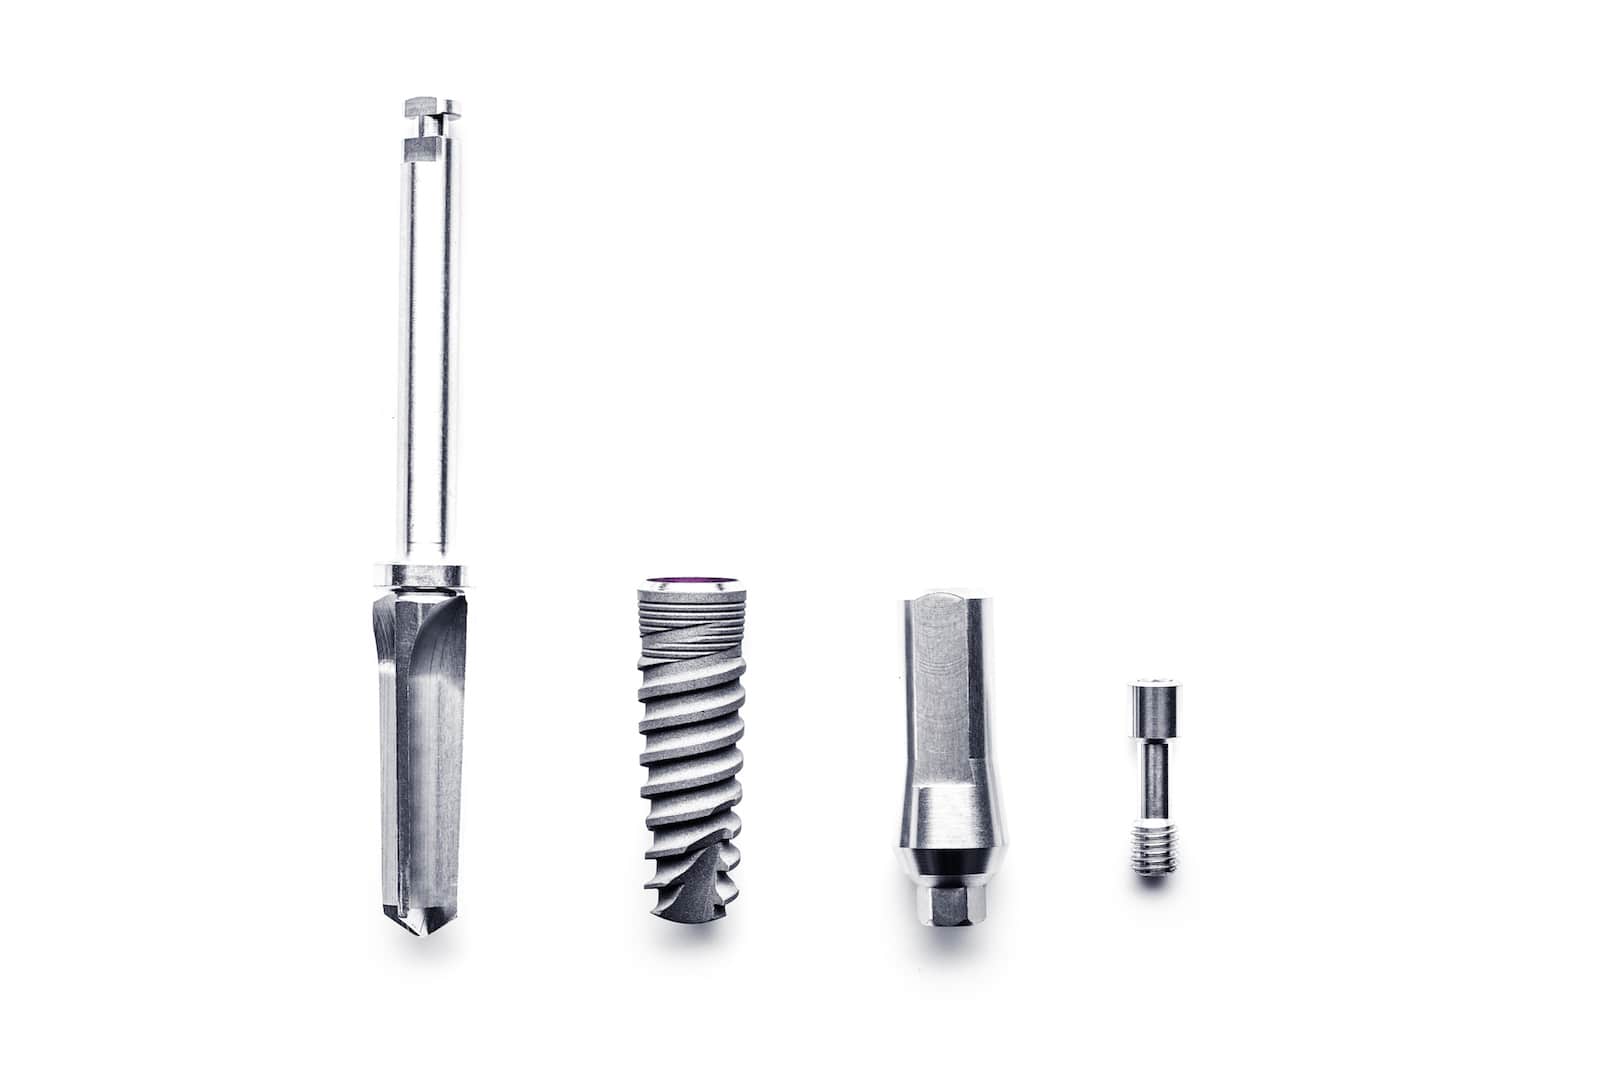 Set of medical implantation screw tools